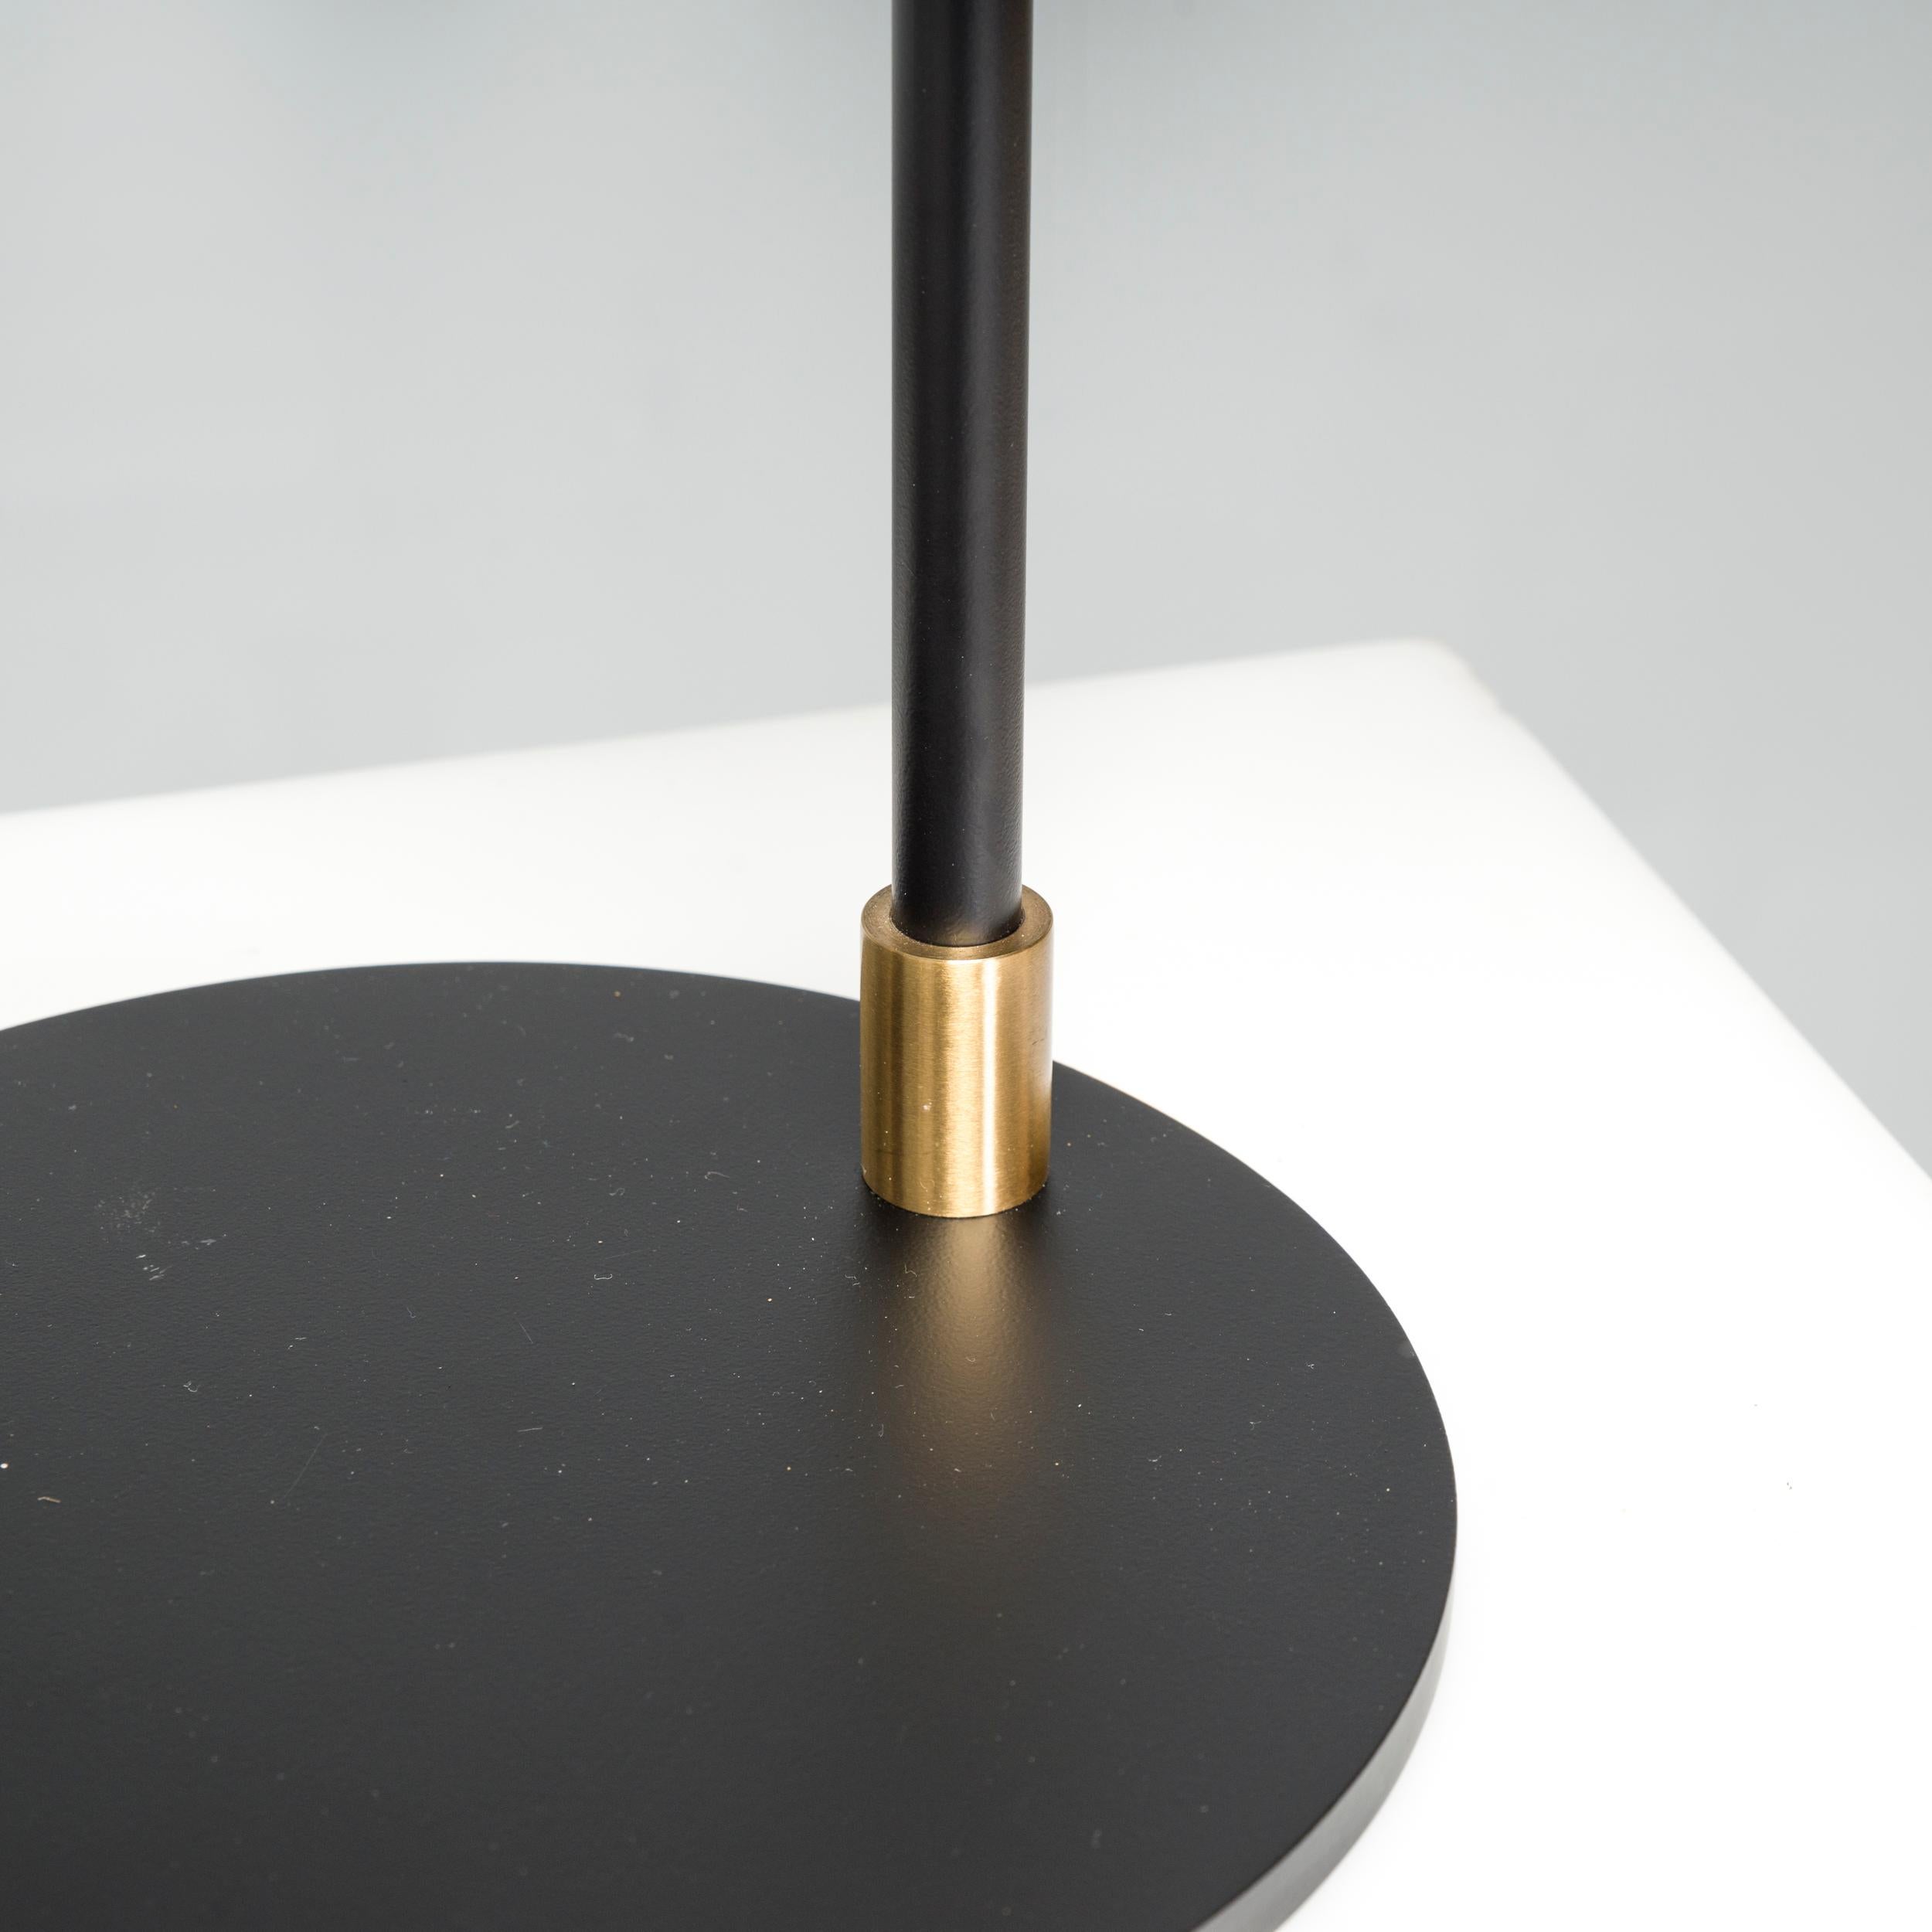 Lektor by Rubn Black and Blass LED Desk Table Lamp 2